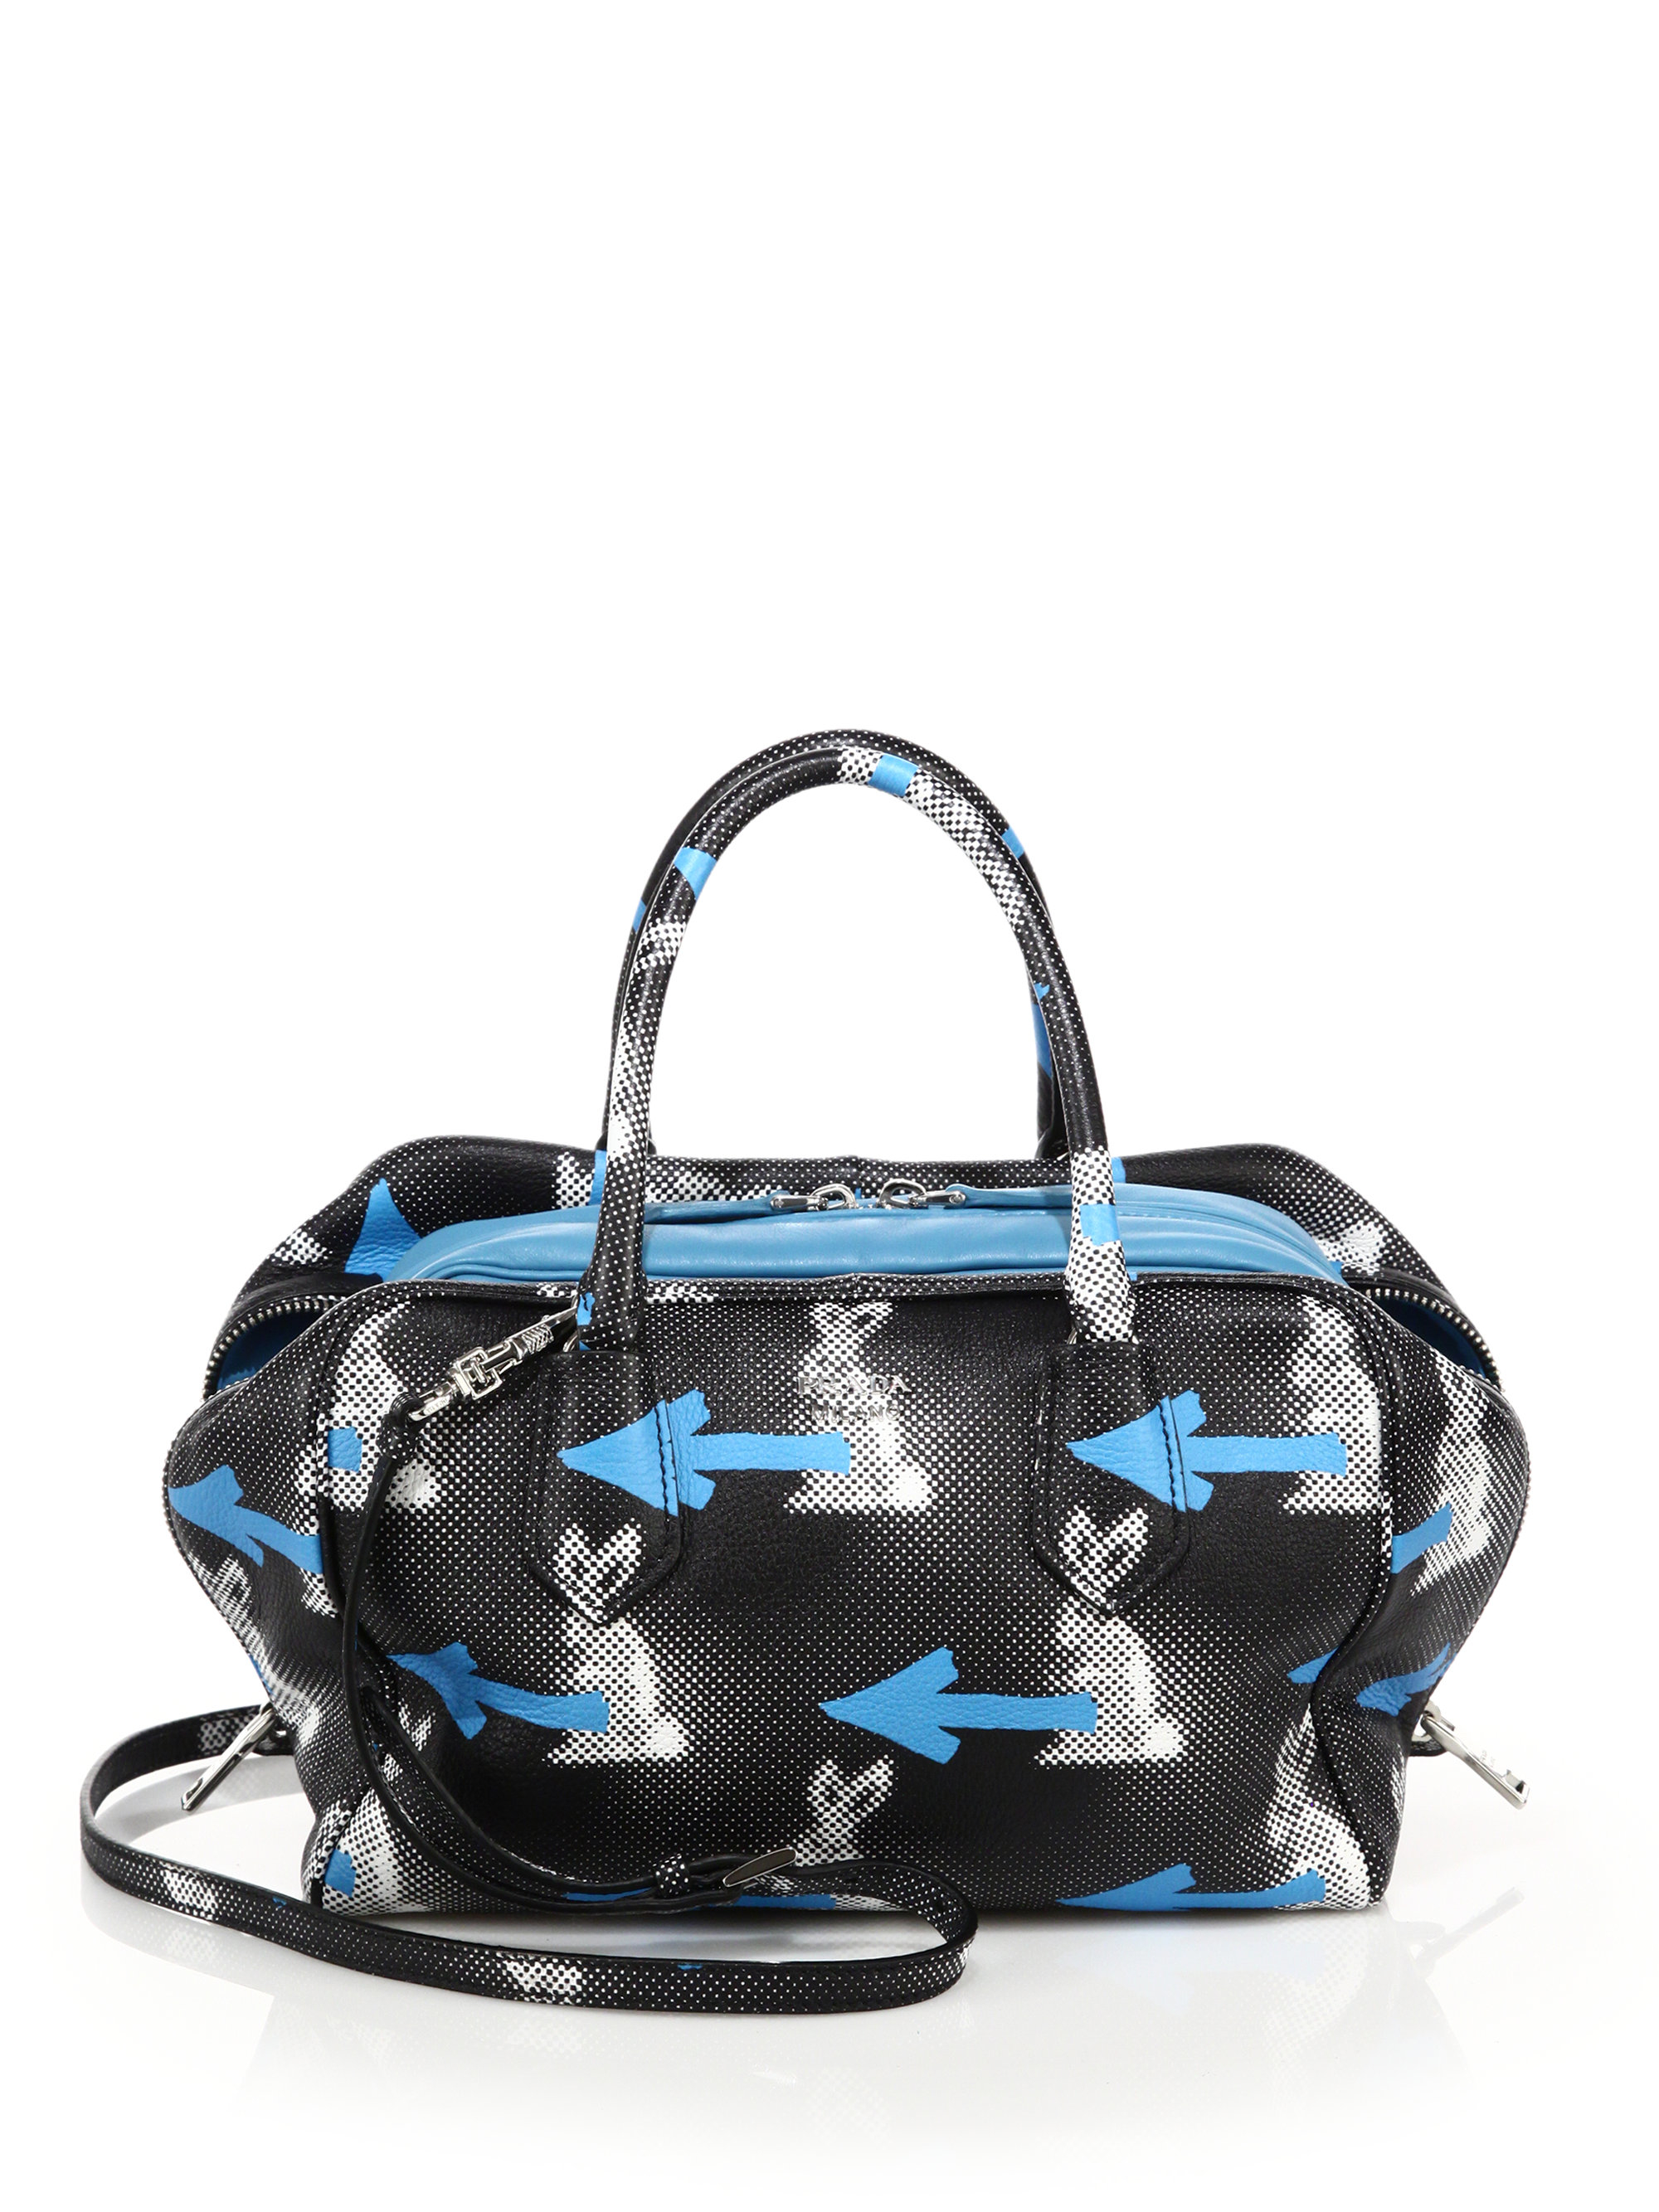 Prada Rabbit-print Leather Inside Bag in Blue - Lyst